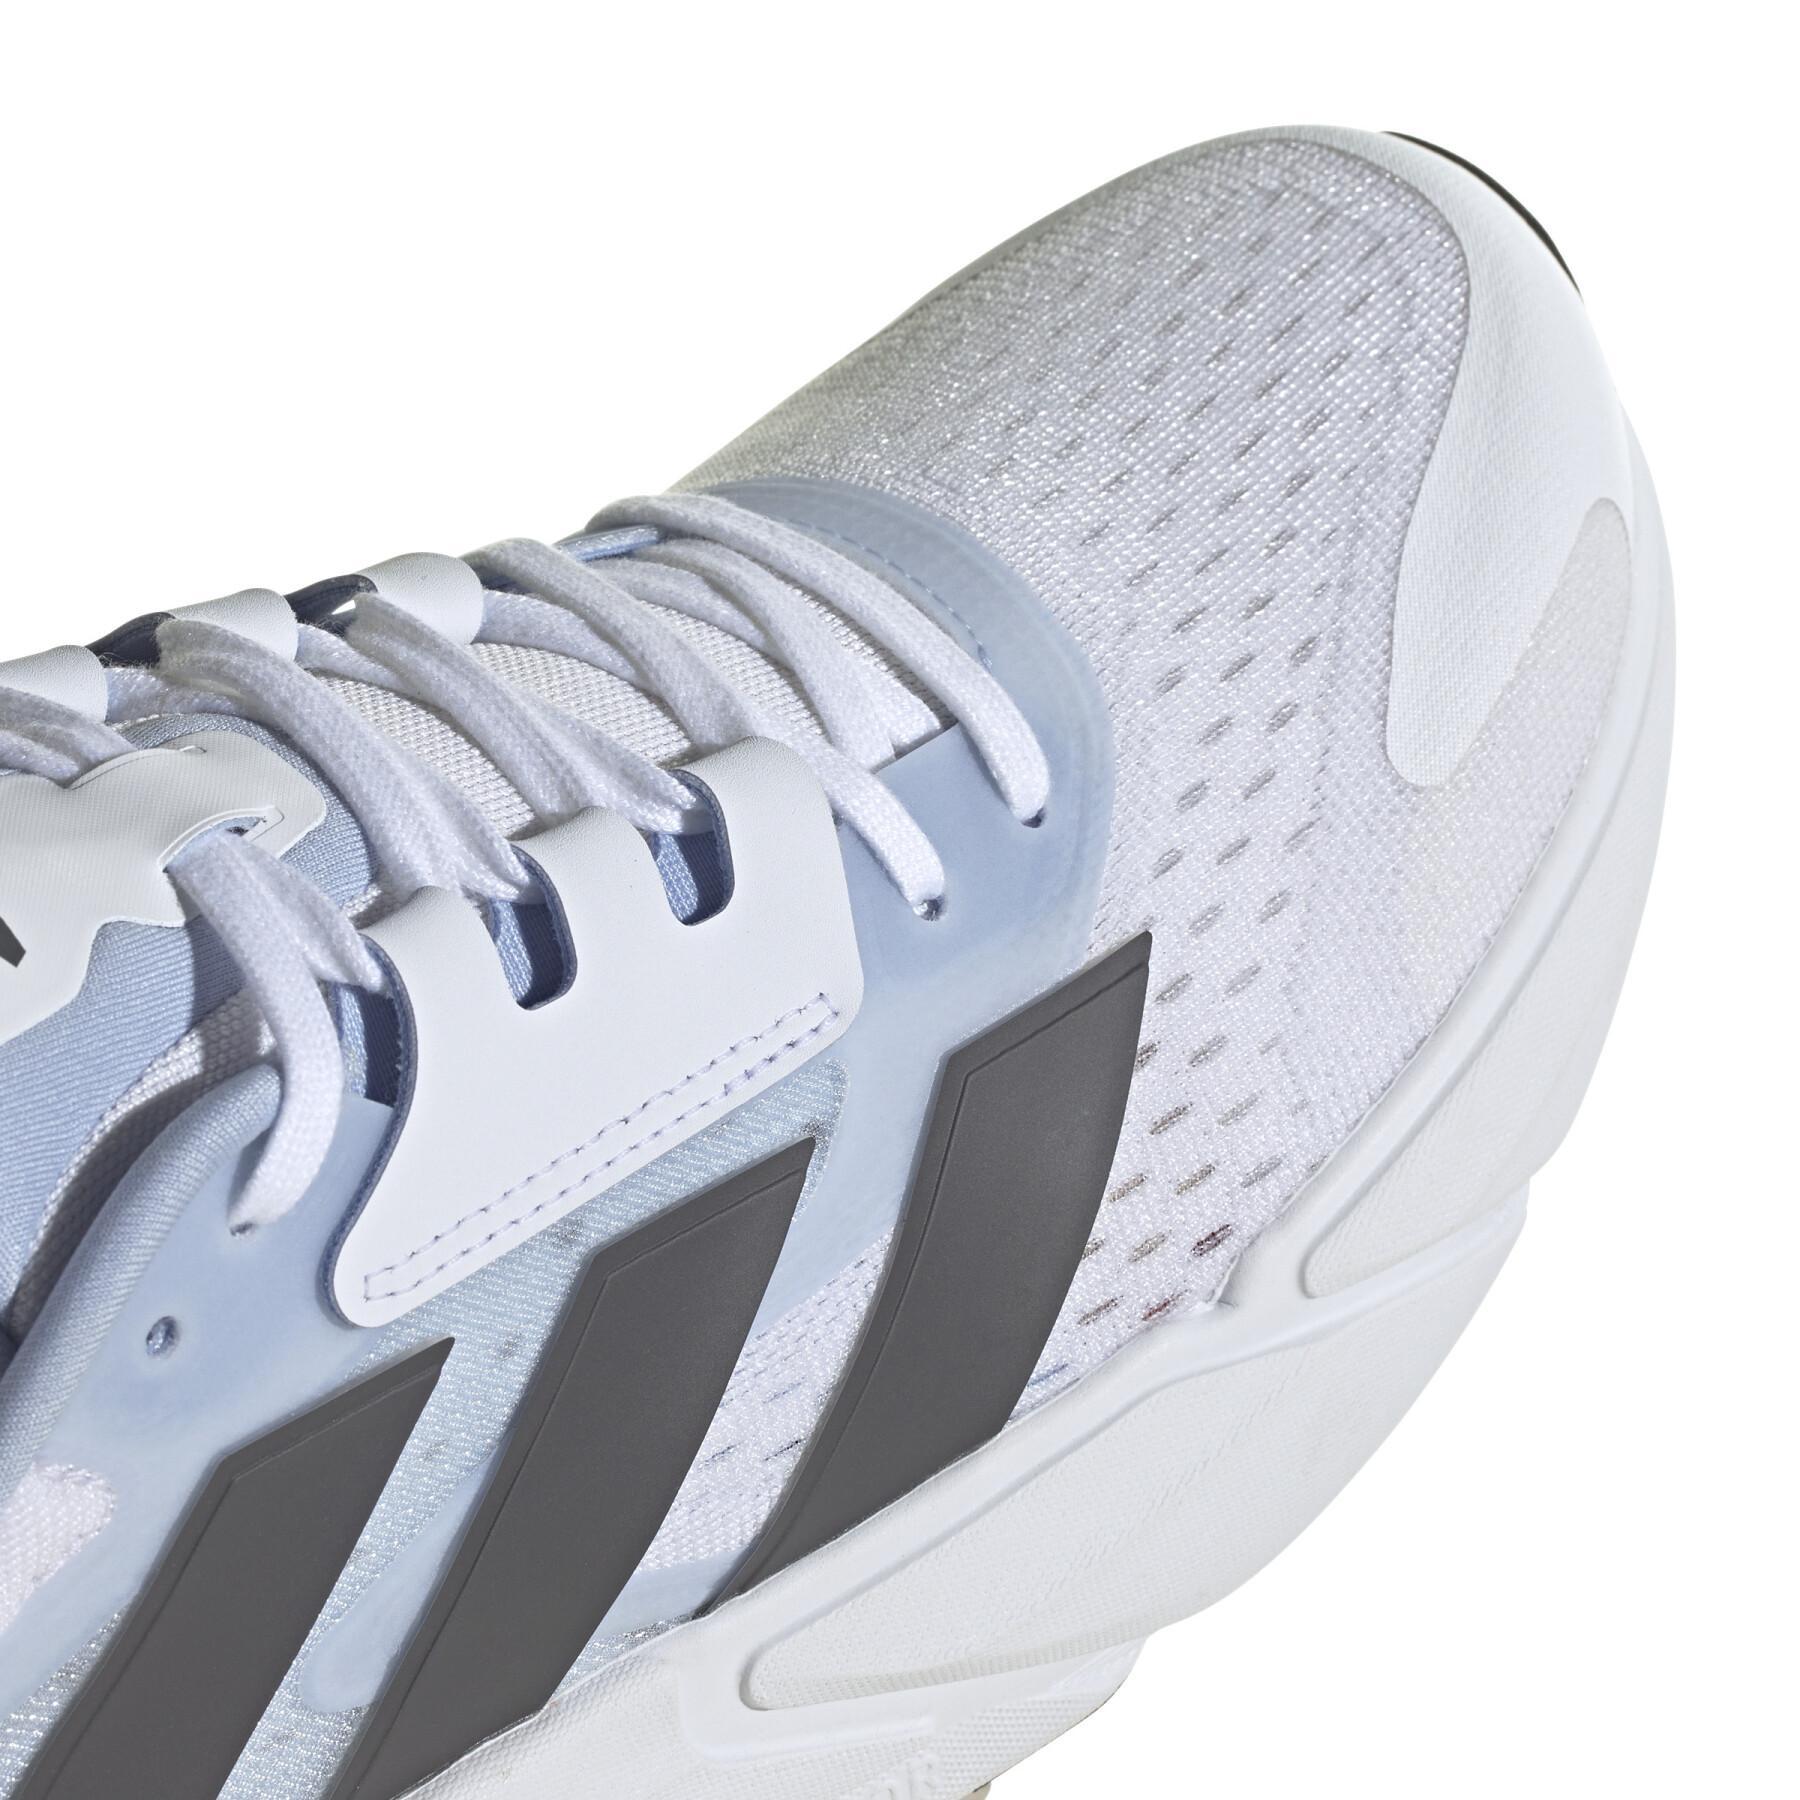 Sapato de running adidas Adistar 2.0